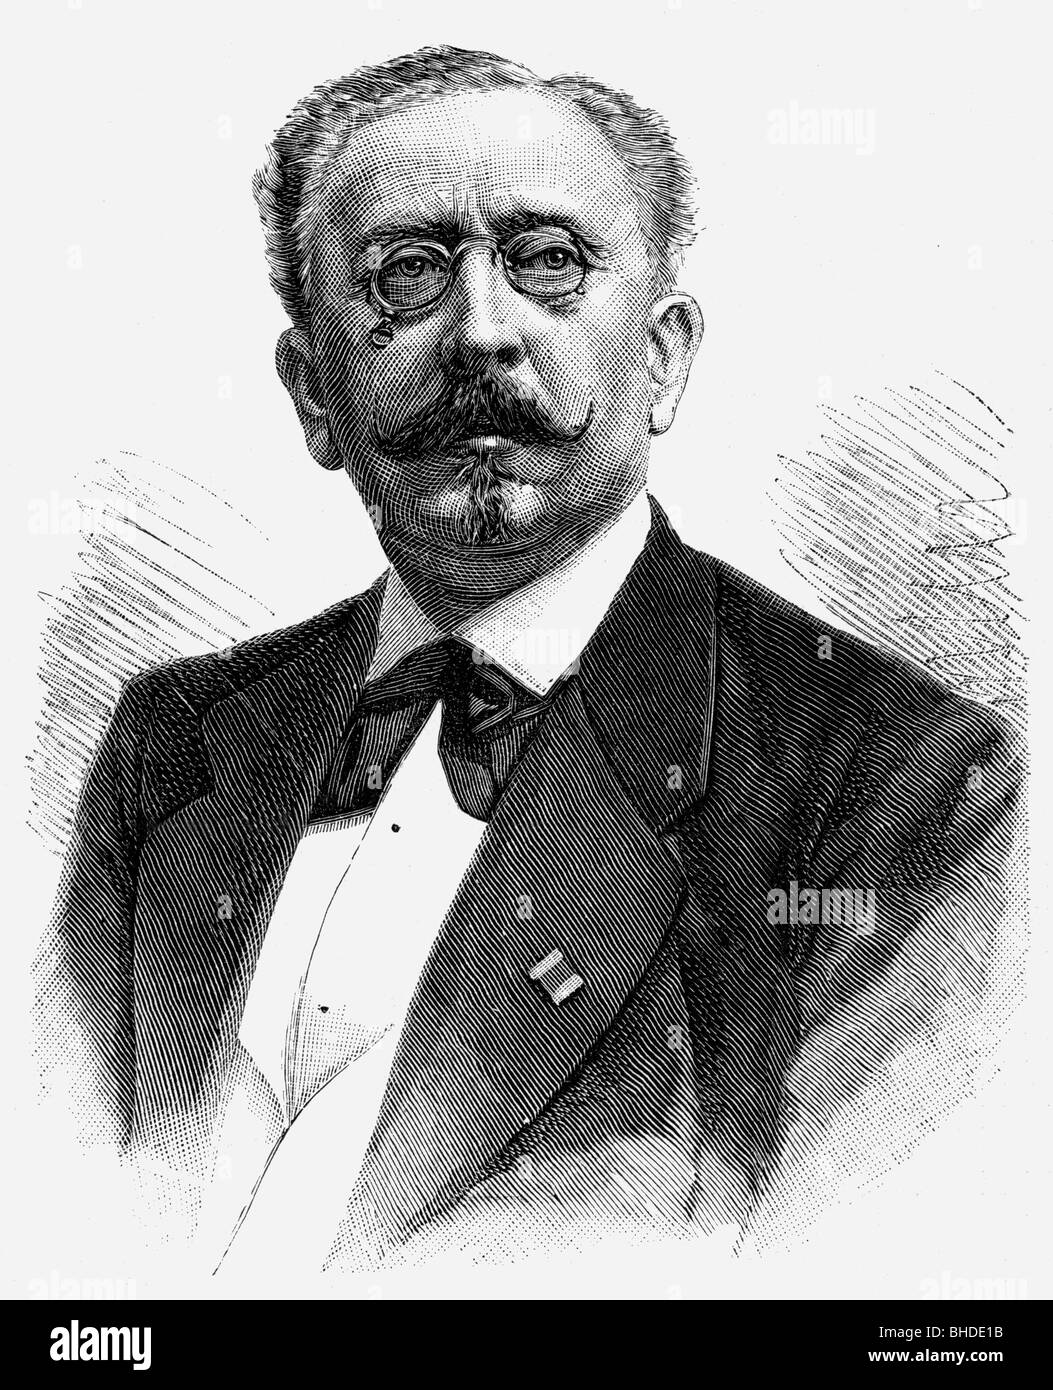 Huelsen, Botho von 10.12.1815 - 30.9.1886, German theatre director, portrait, wood engraving, Stock Photo